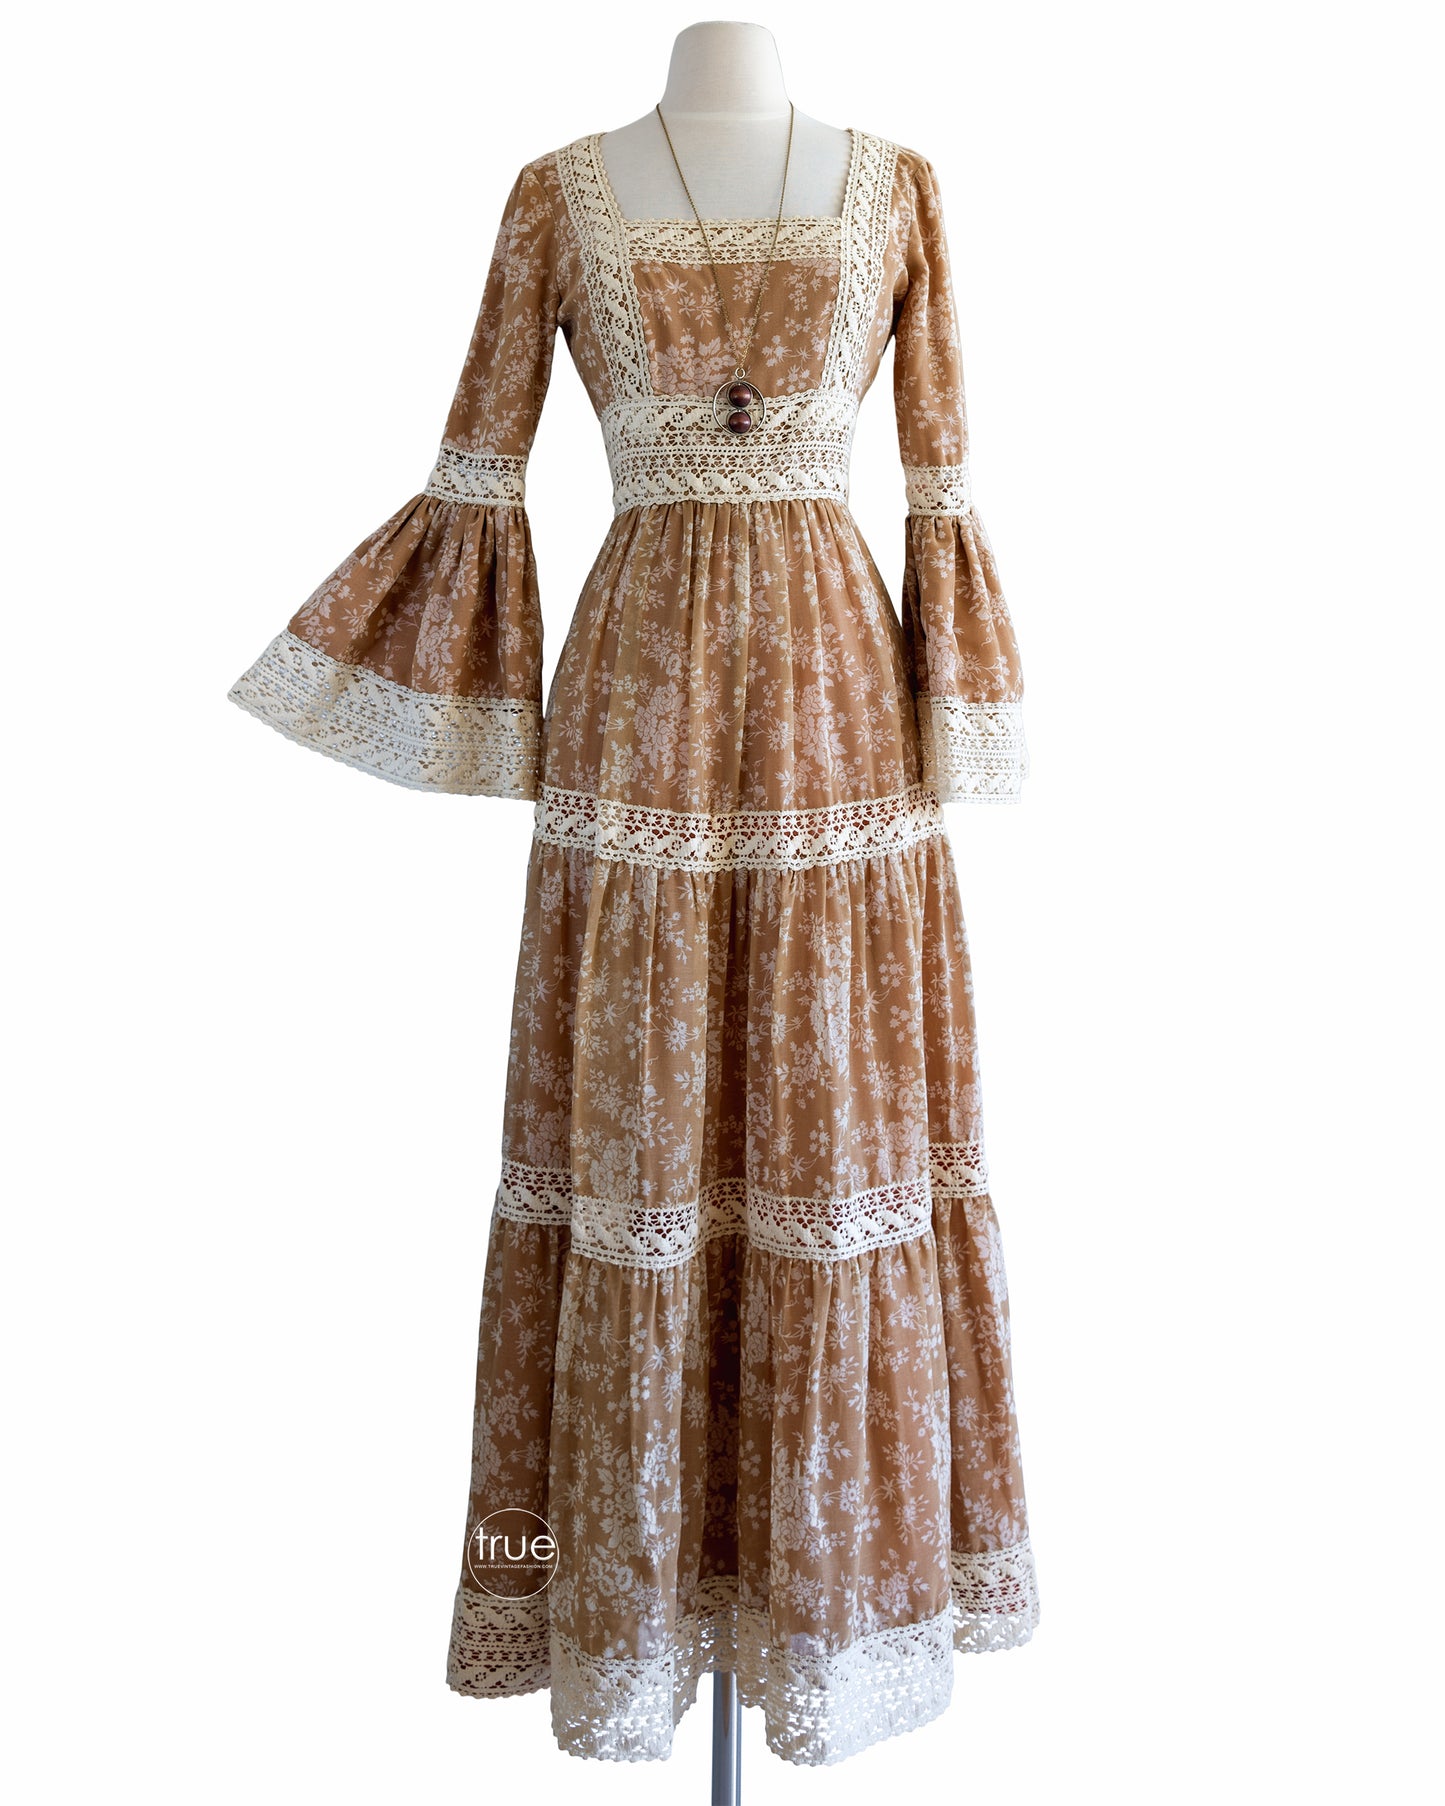 vintage 1970's dress ...designer Victor Costa gunne sax style midi dress